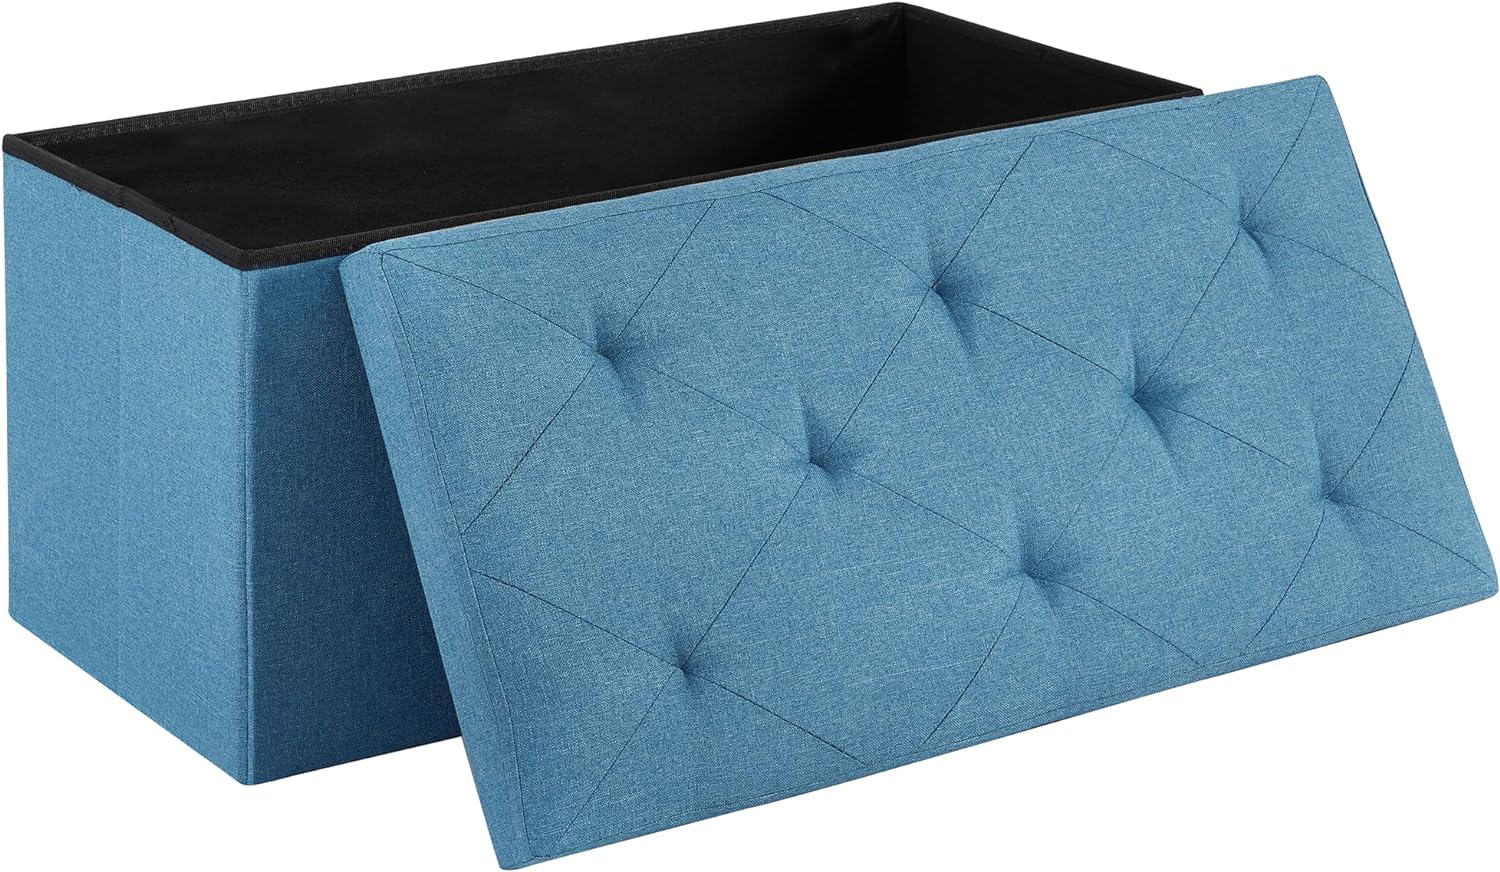 VECELO Folding Storage Ottoman Bench, Storage Chest, Linen Fabric